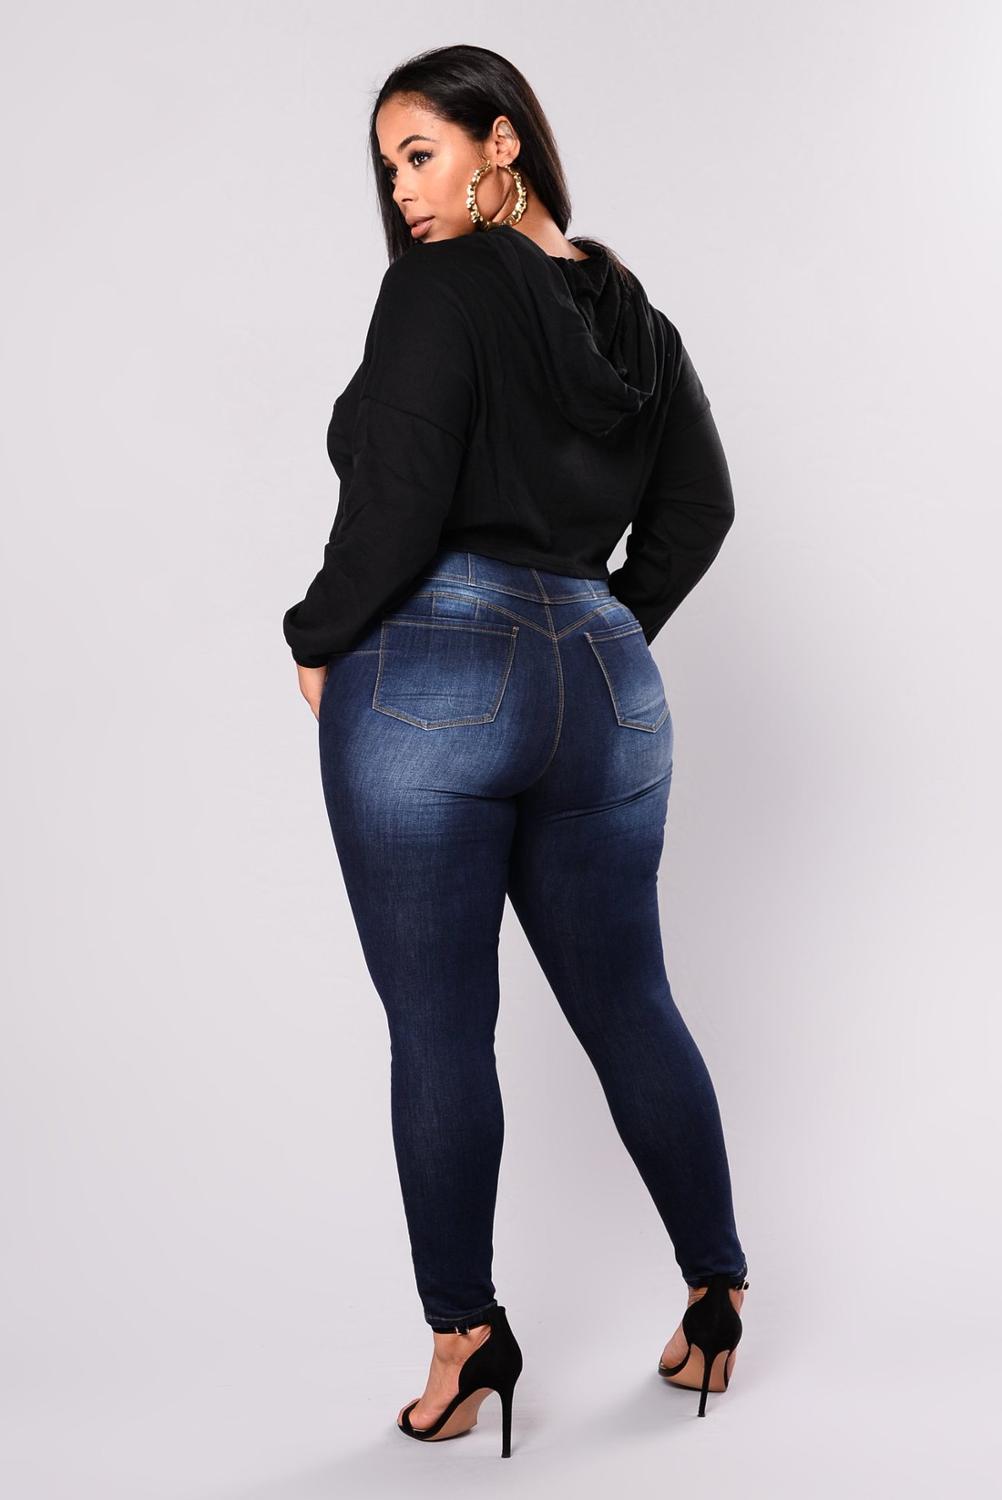 Women's Plus Size High Waist Jeans Casual Denim Jeans High Quality Pants